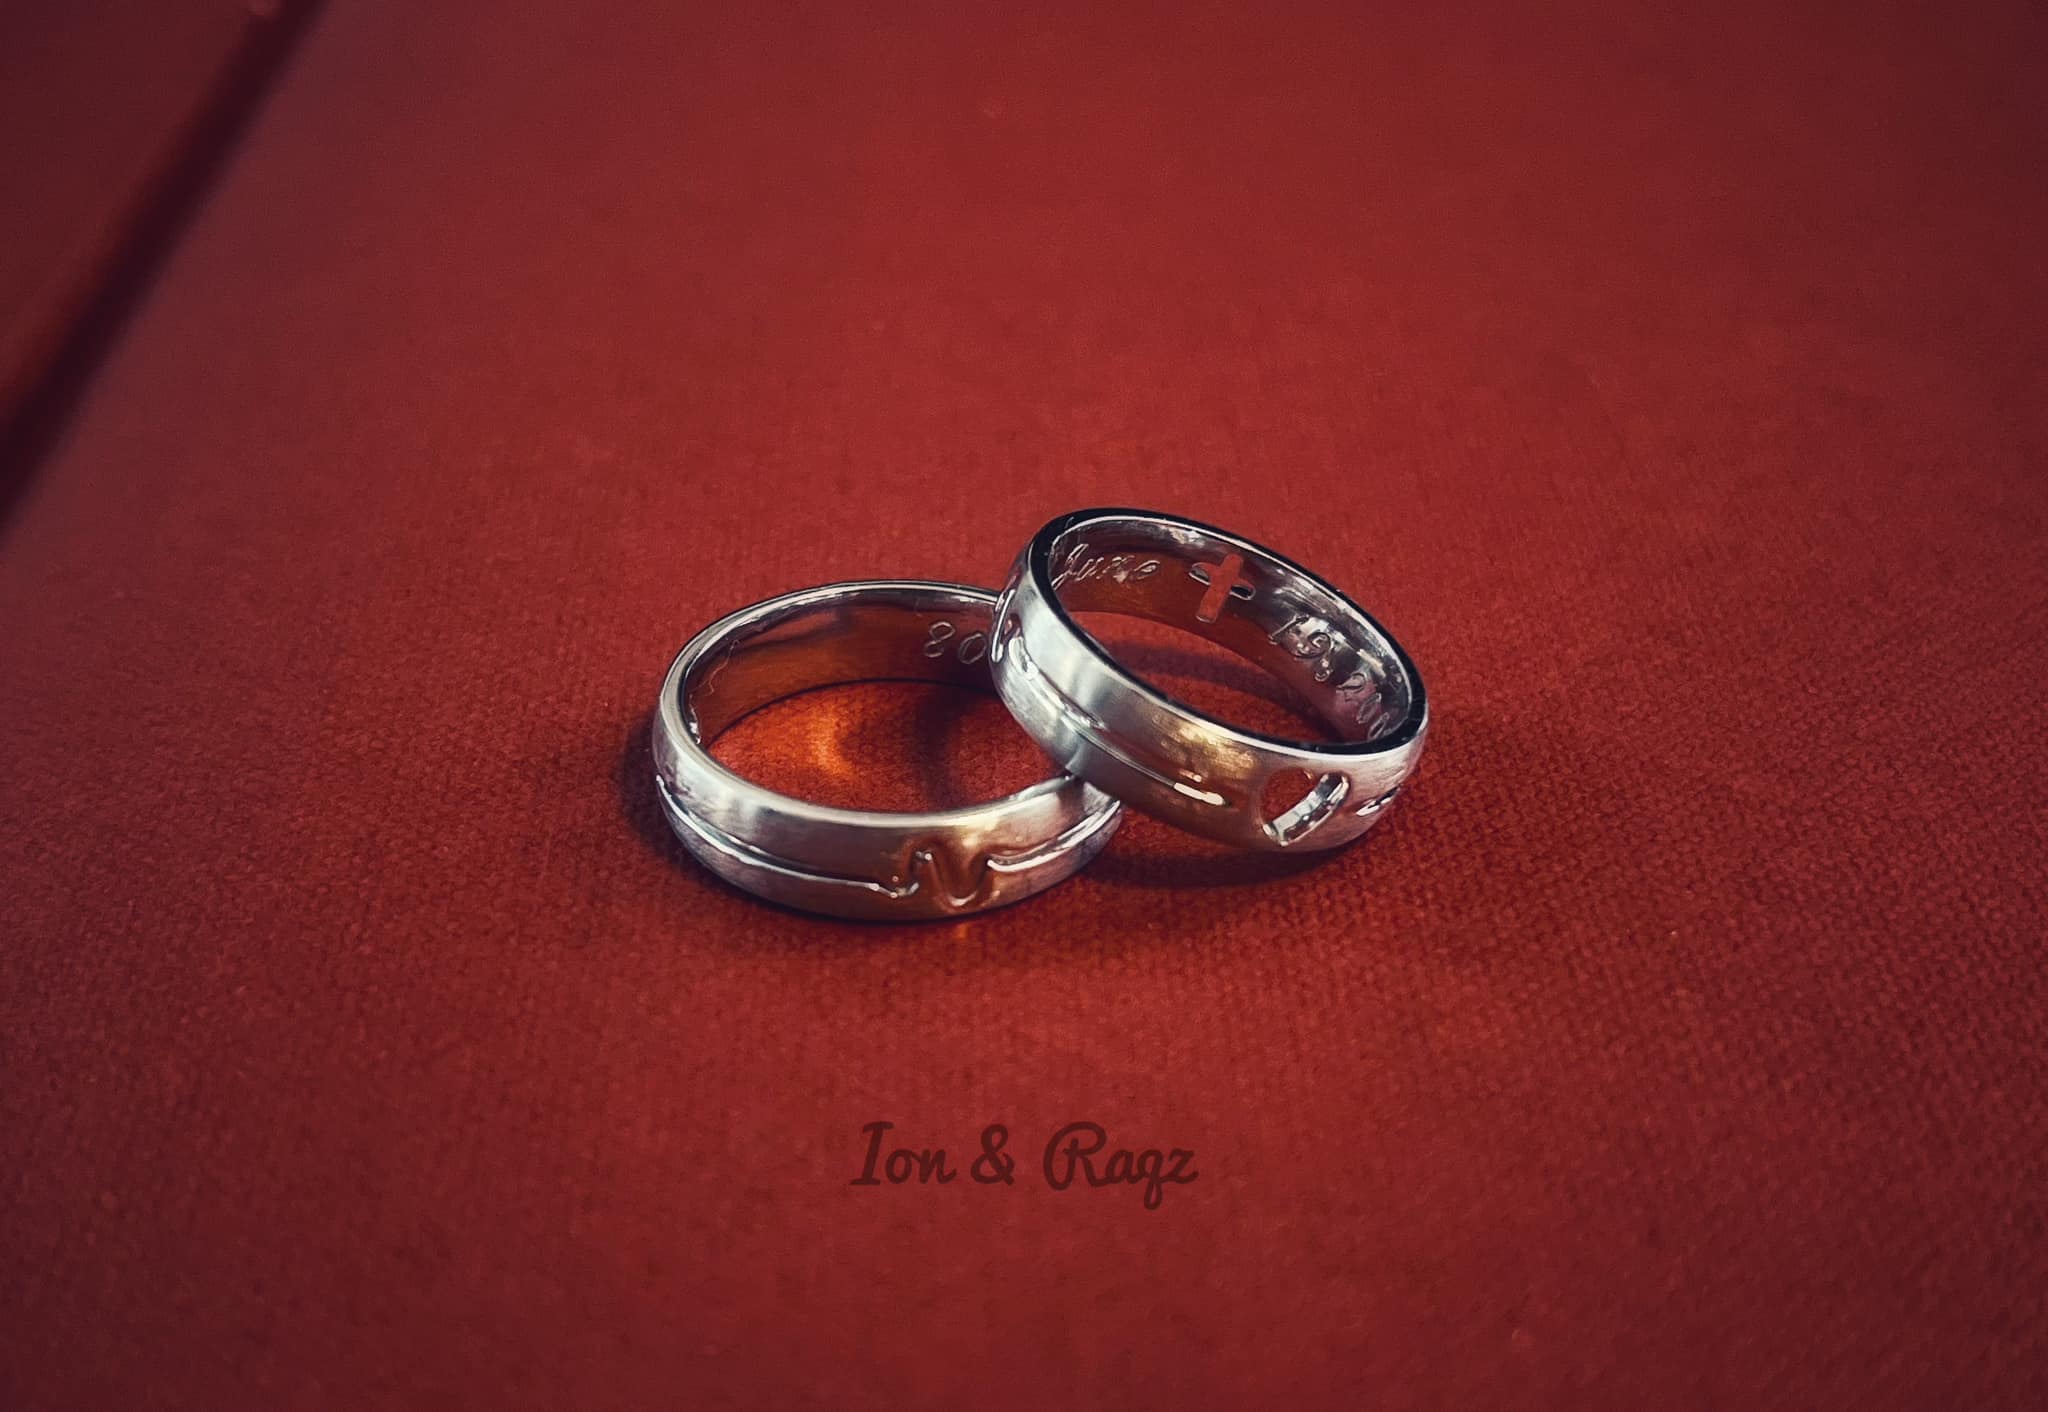 Personalized Wedding Ring Buy Online - Diamondrensu